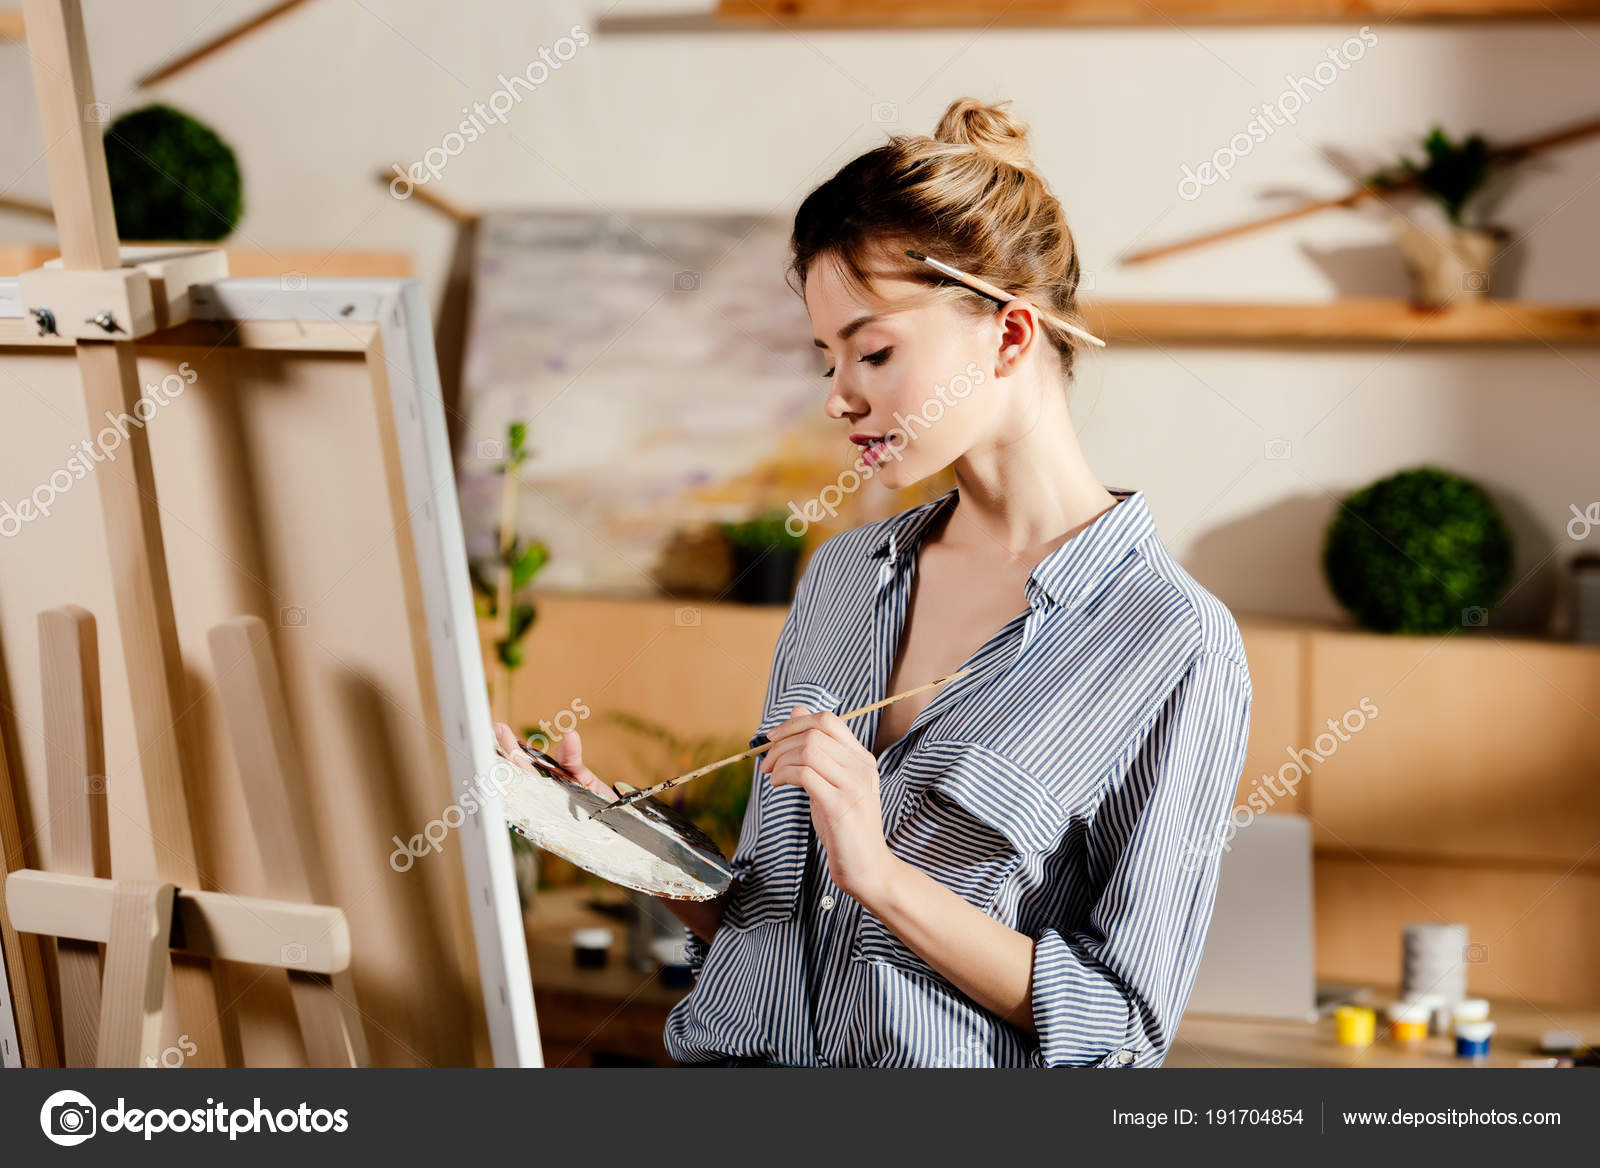 https://st3.depositphotos.com/12982378/19170/i/1600/depositphotos_191704854-stock-photo-female-artist-paintbrush-ear-drawing.jpg